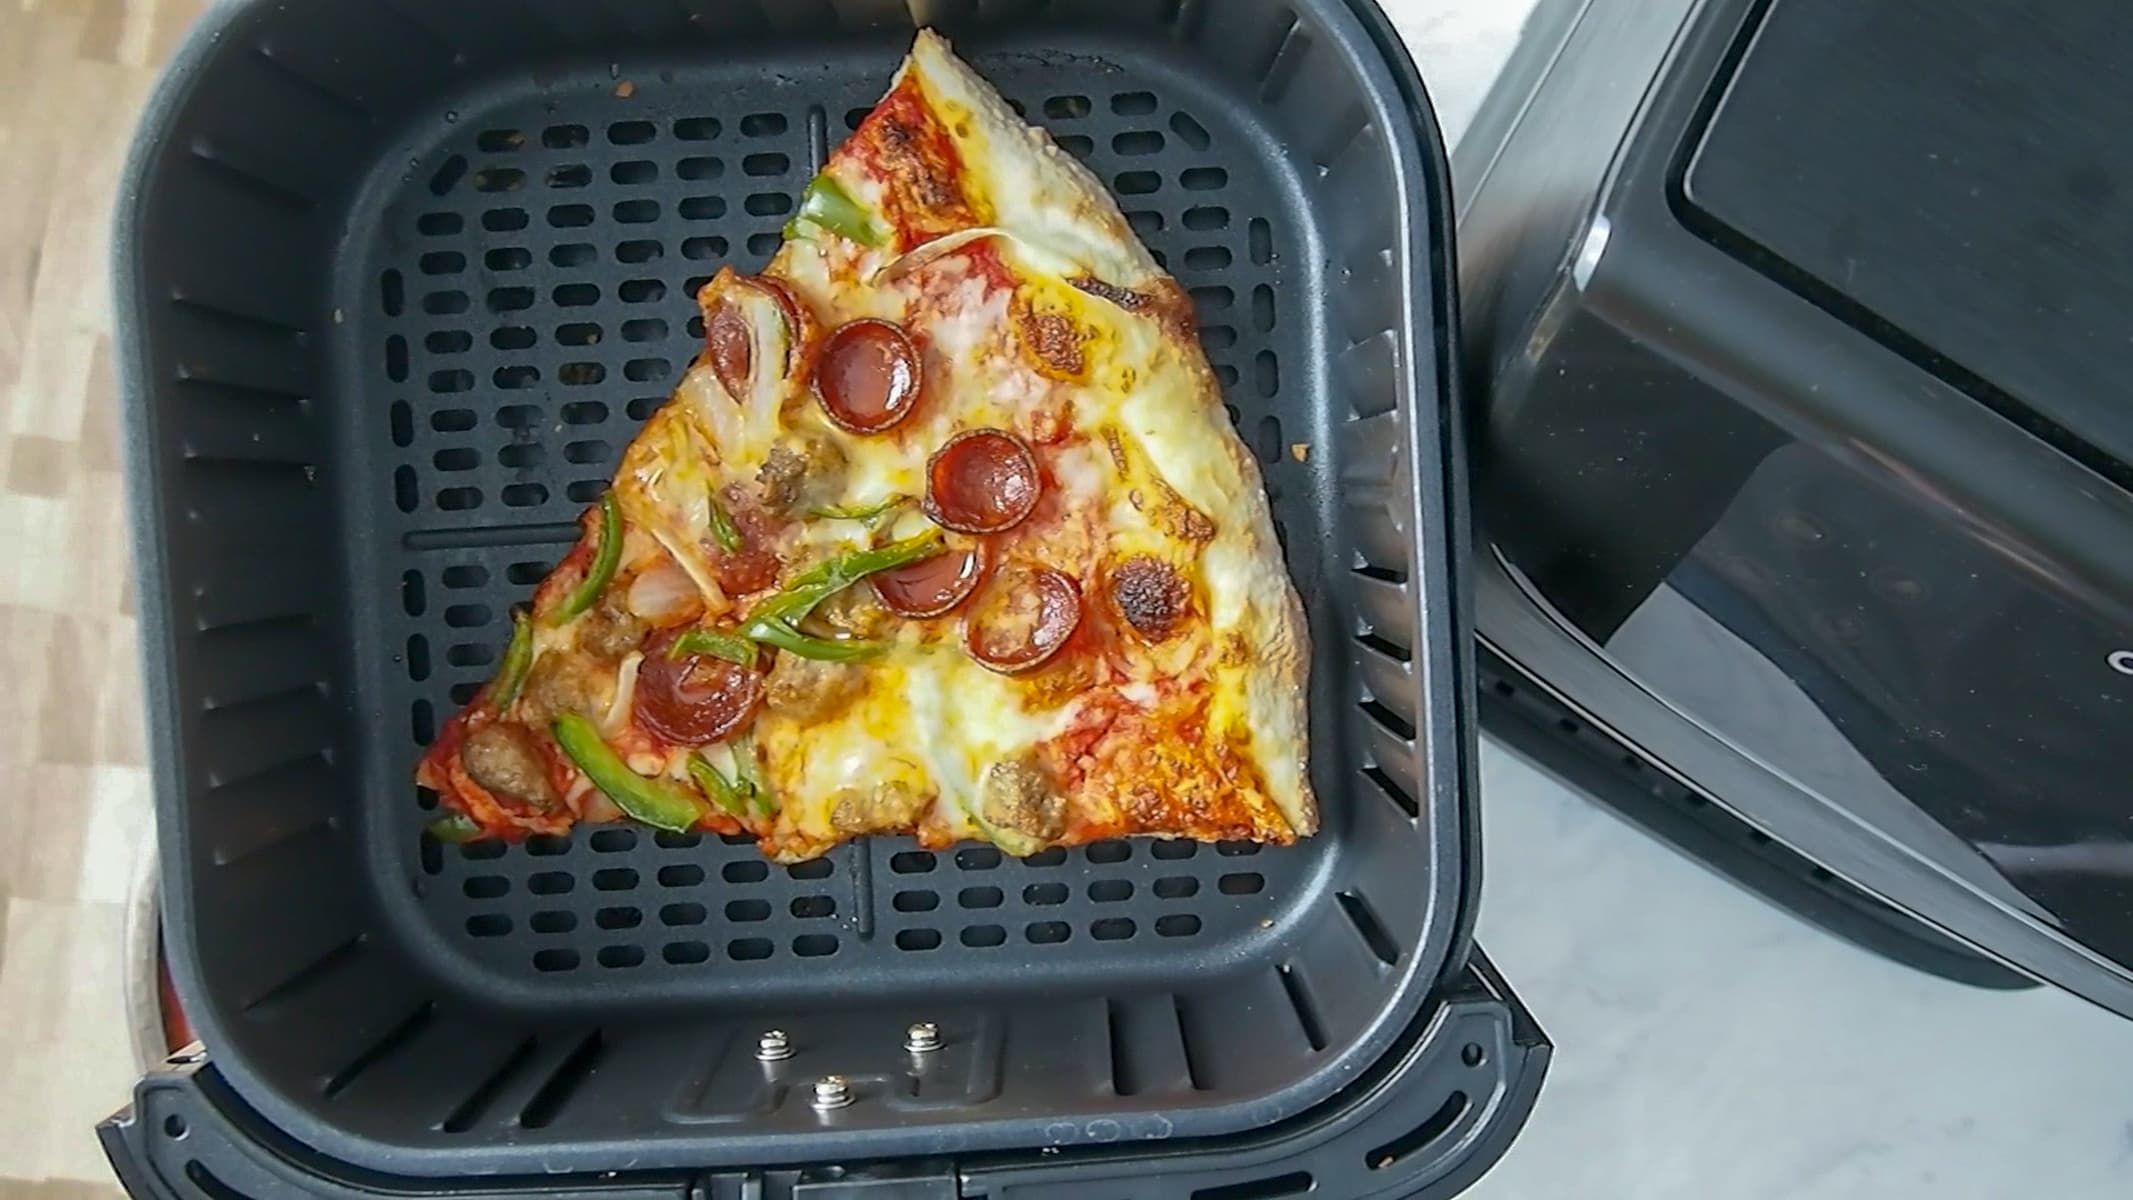 https://www.upstateramblings.com/wp-content/uploads/2021/03/reheating-pizza-1-3.jpg